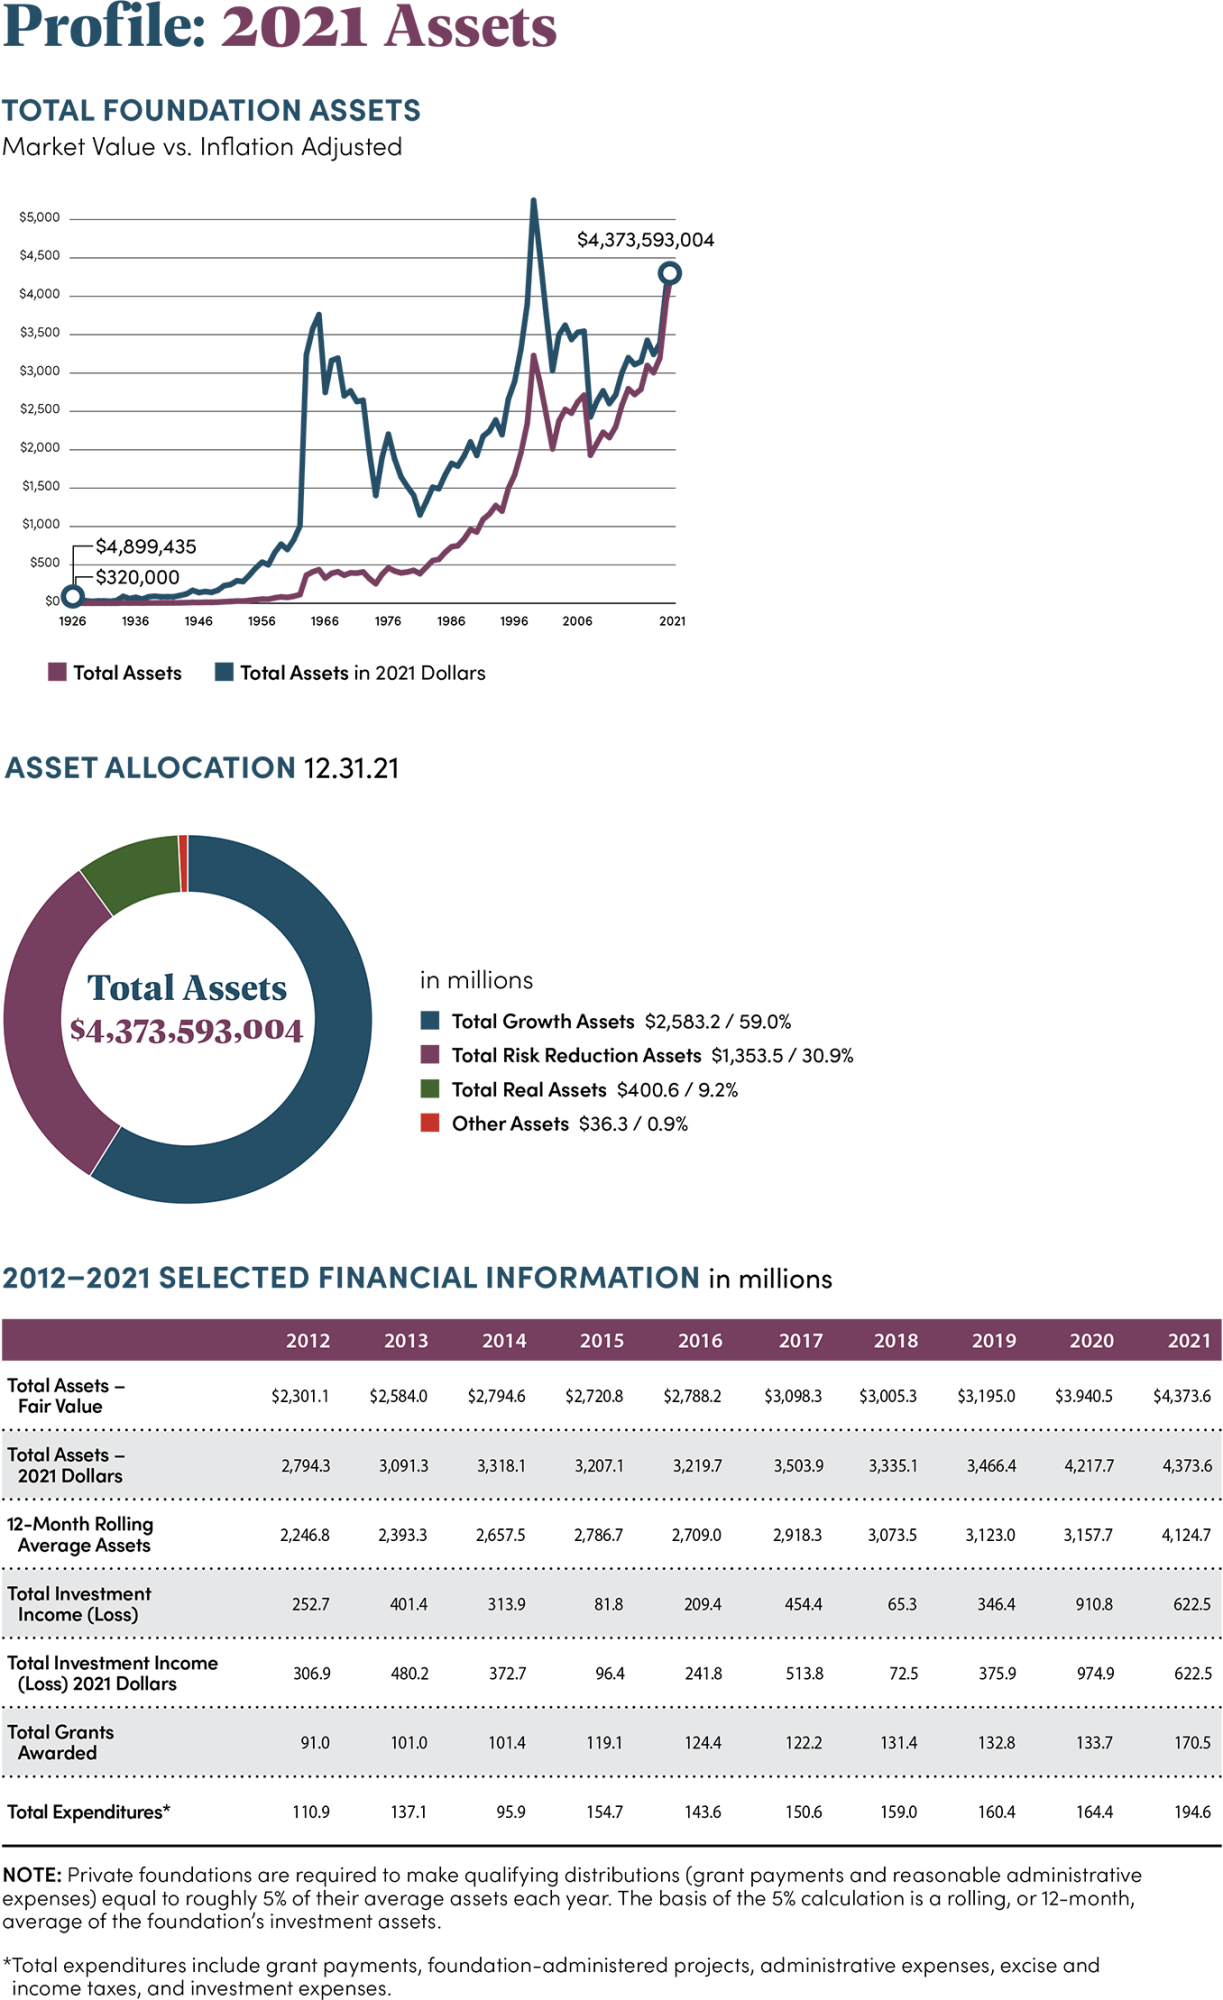 Charts outline the Mott Foundation's 2021 assets